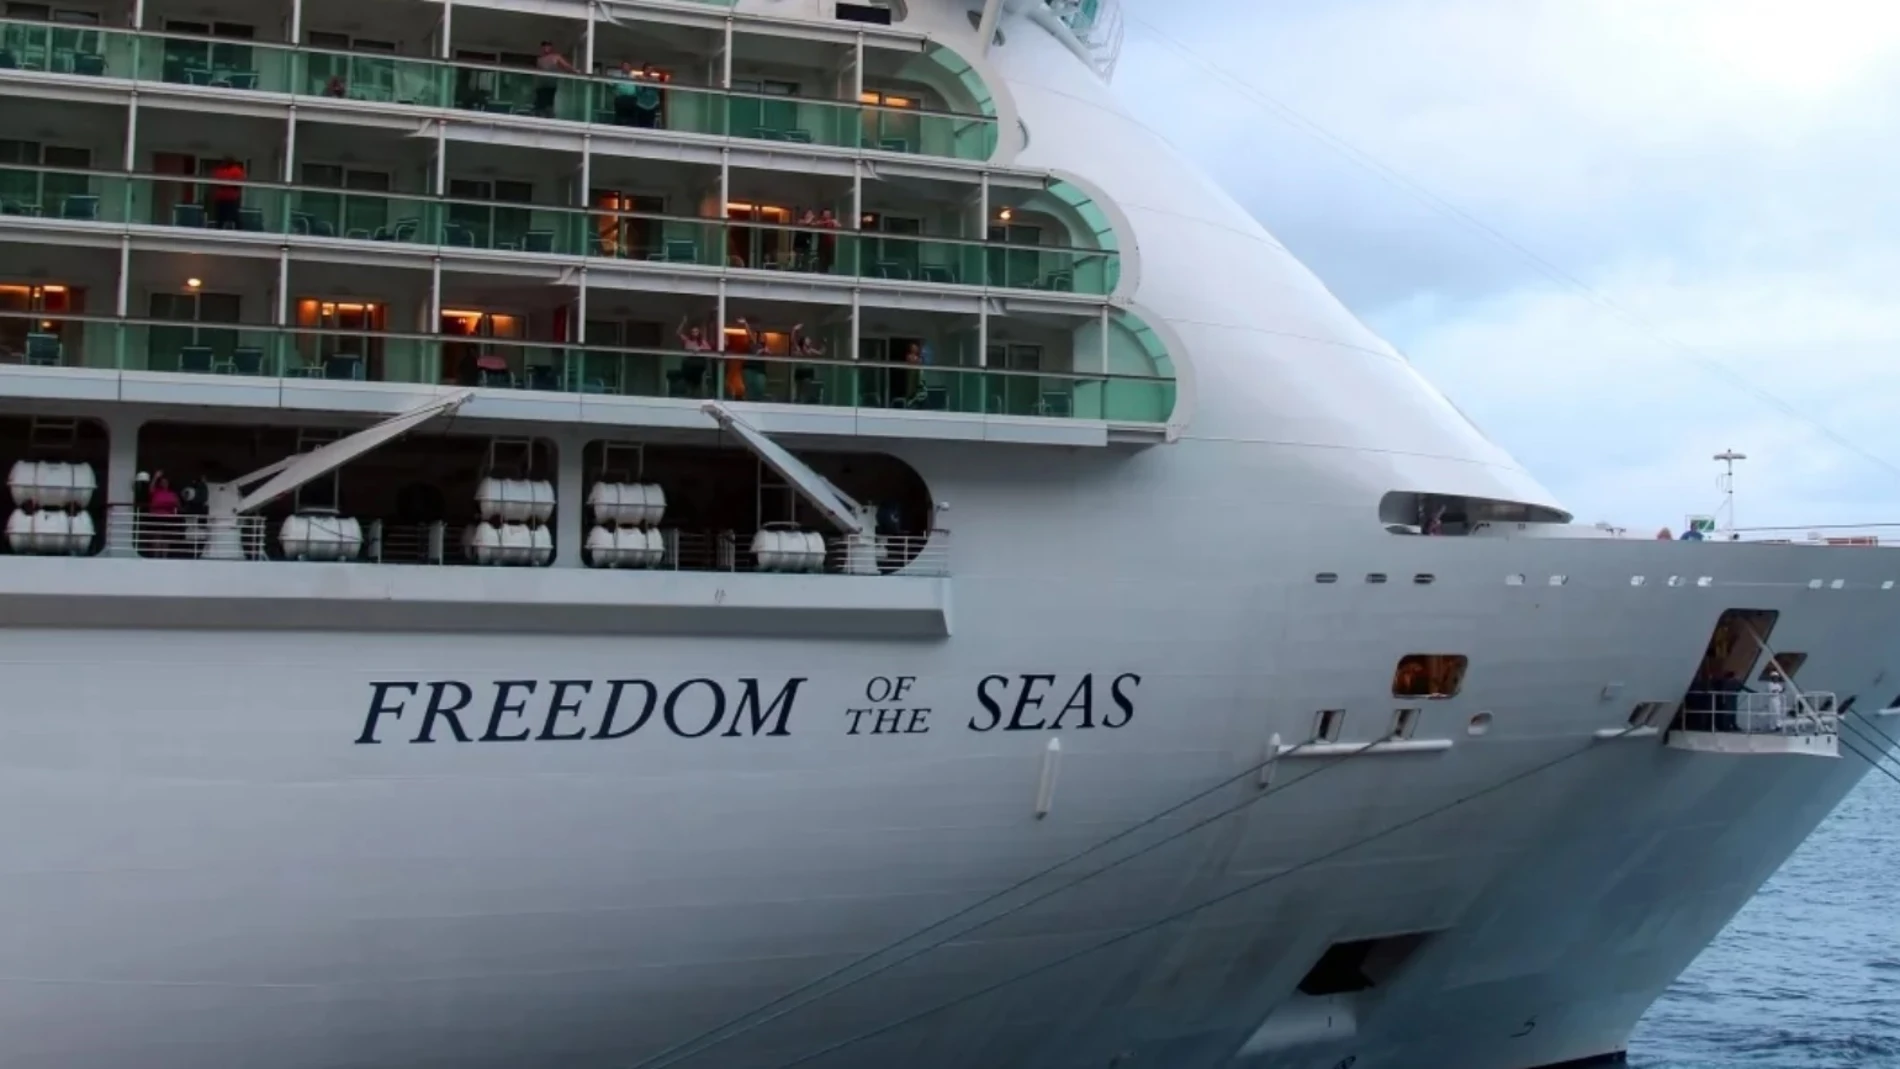 Imagen del crucero Freedom of the seas